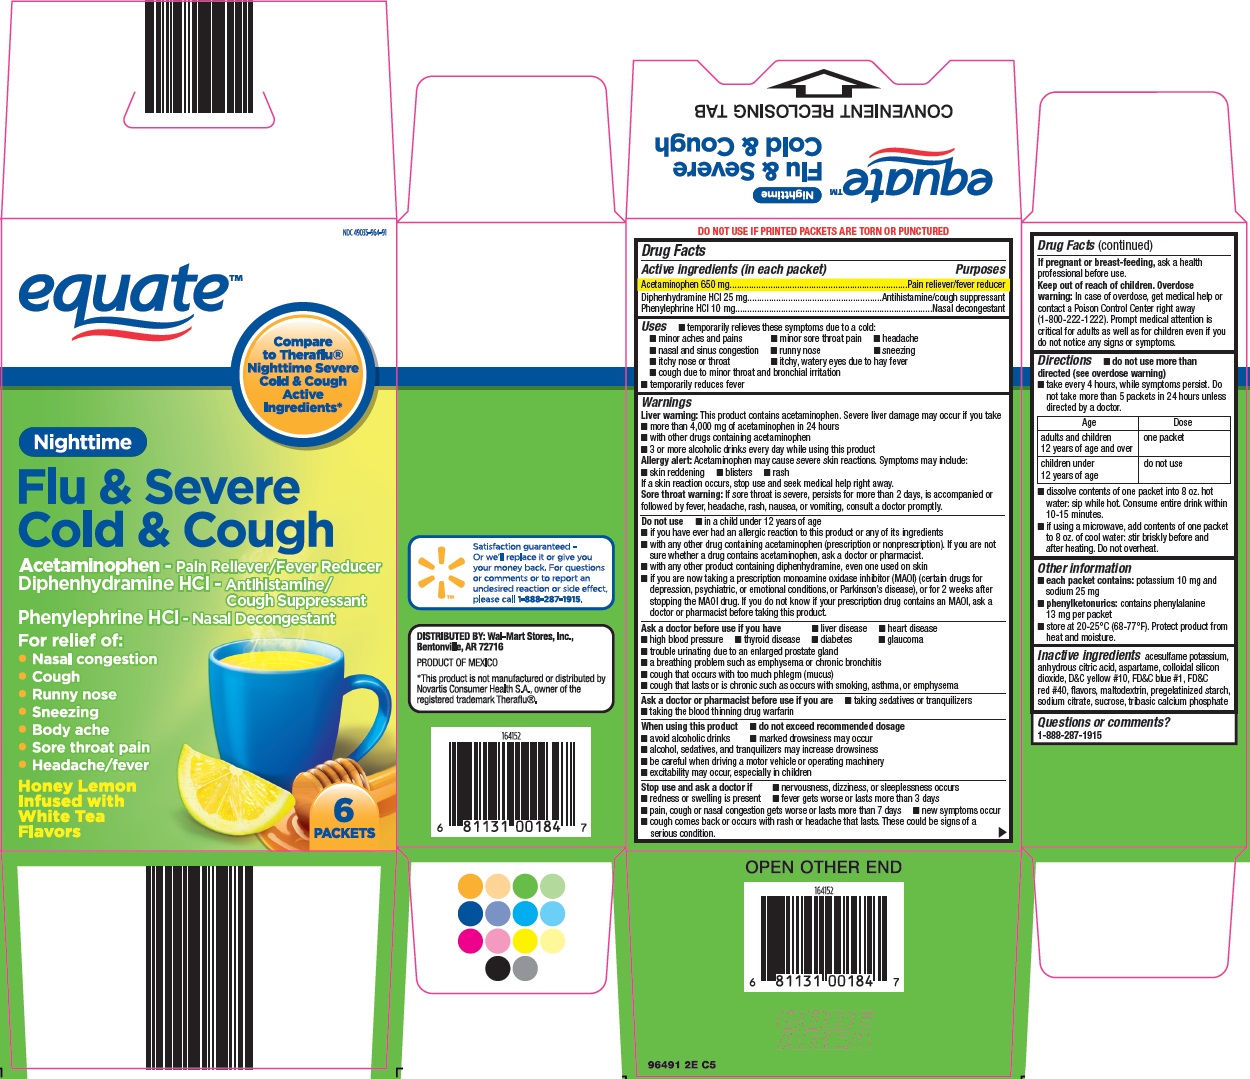 964-2e-flu & severe cold & cough.jpg